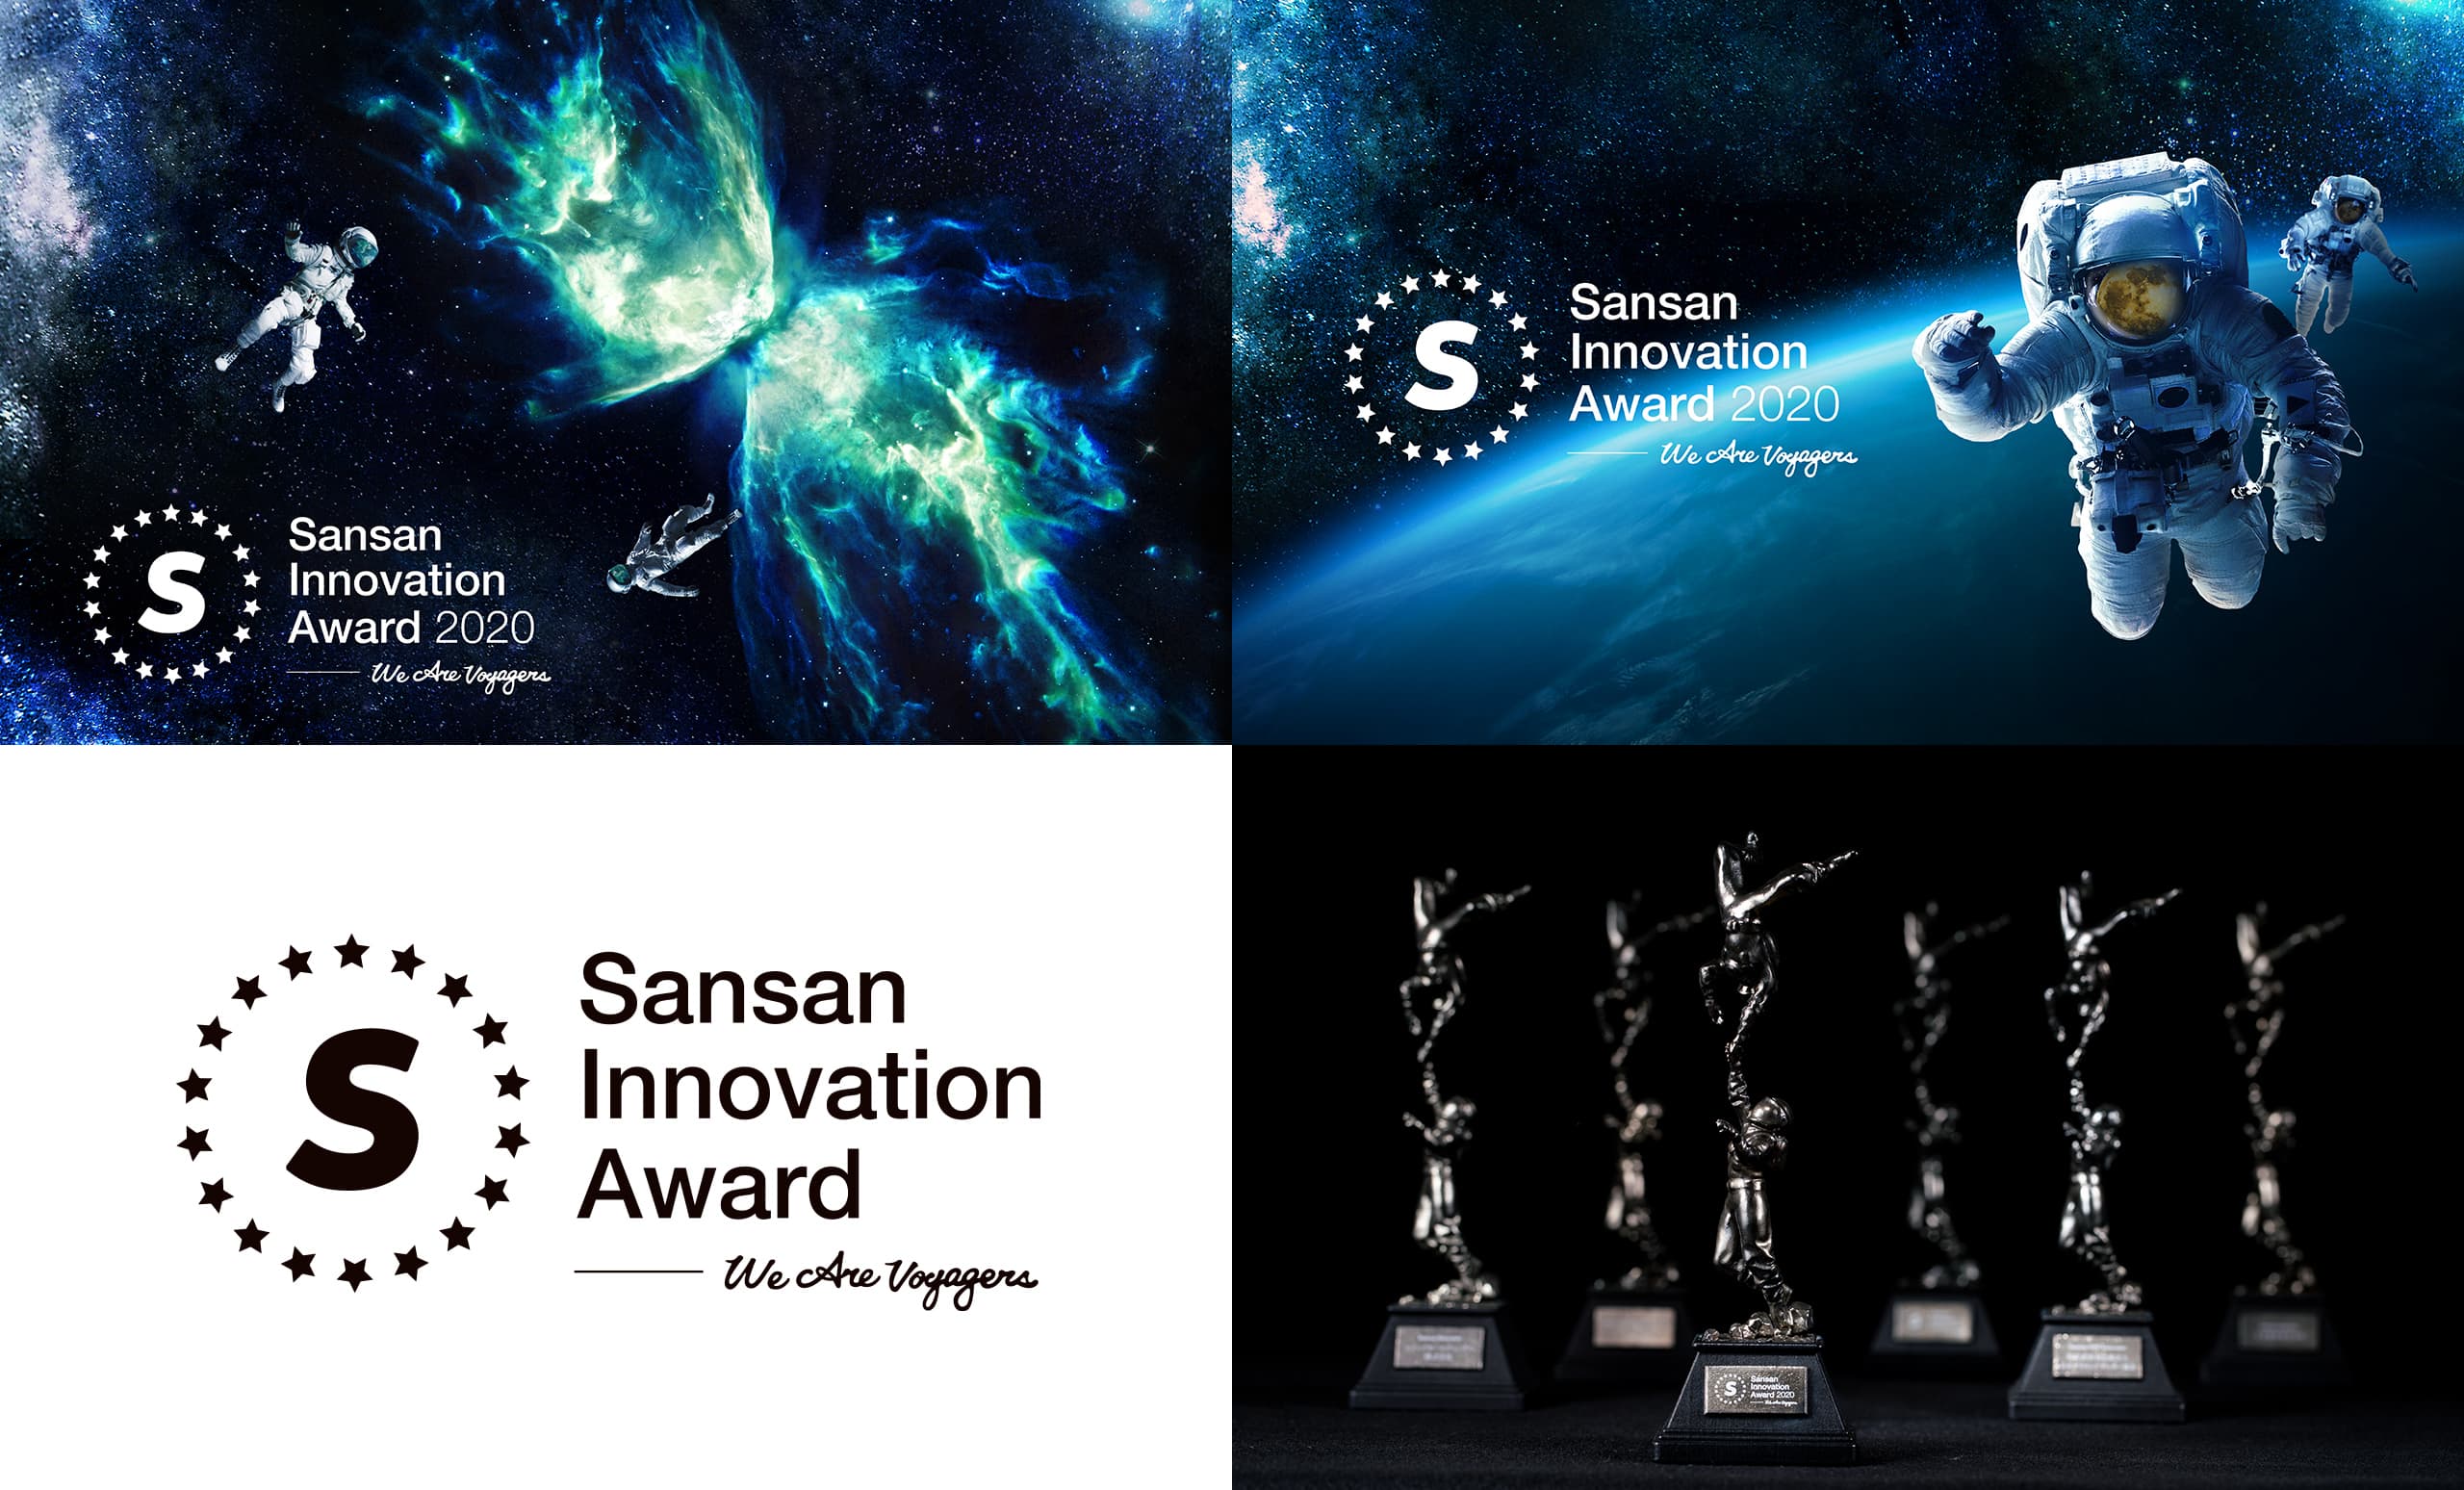 Sansan Innovation Award